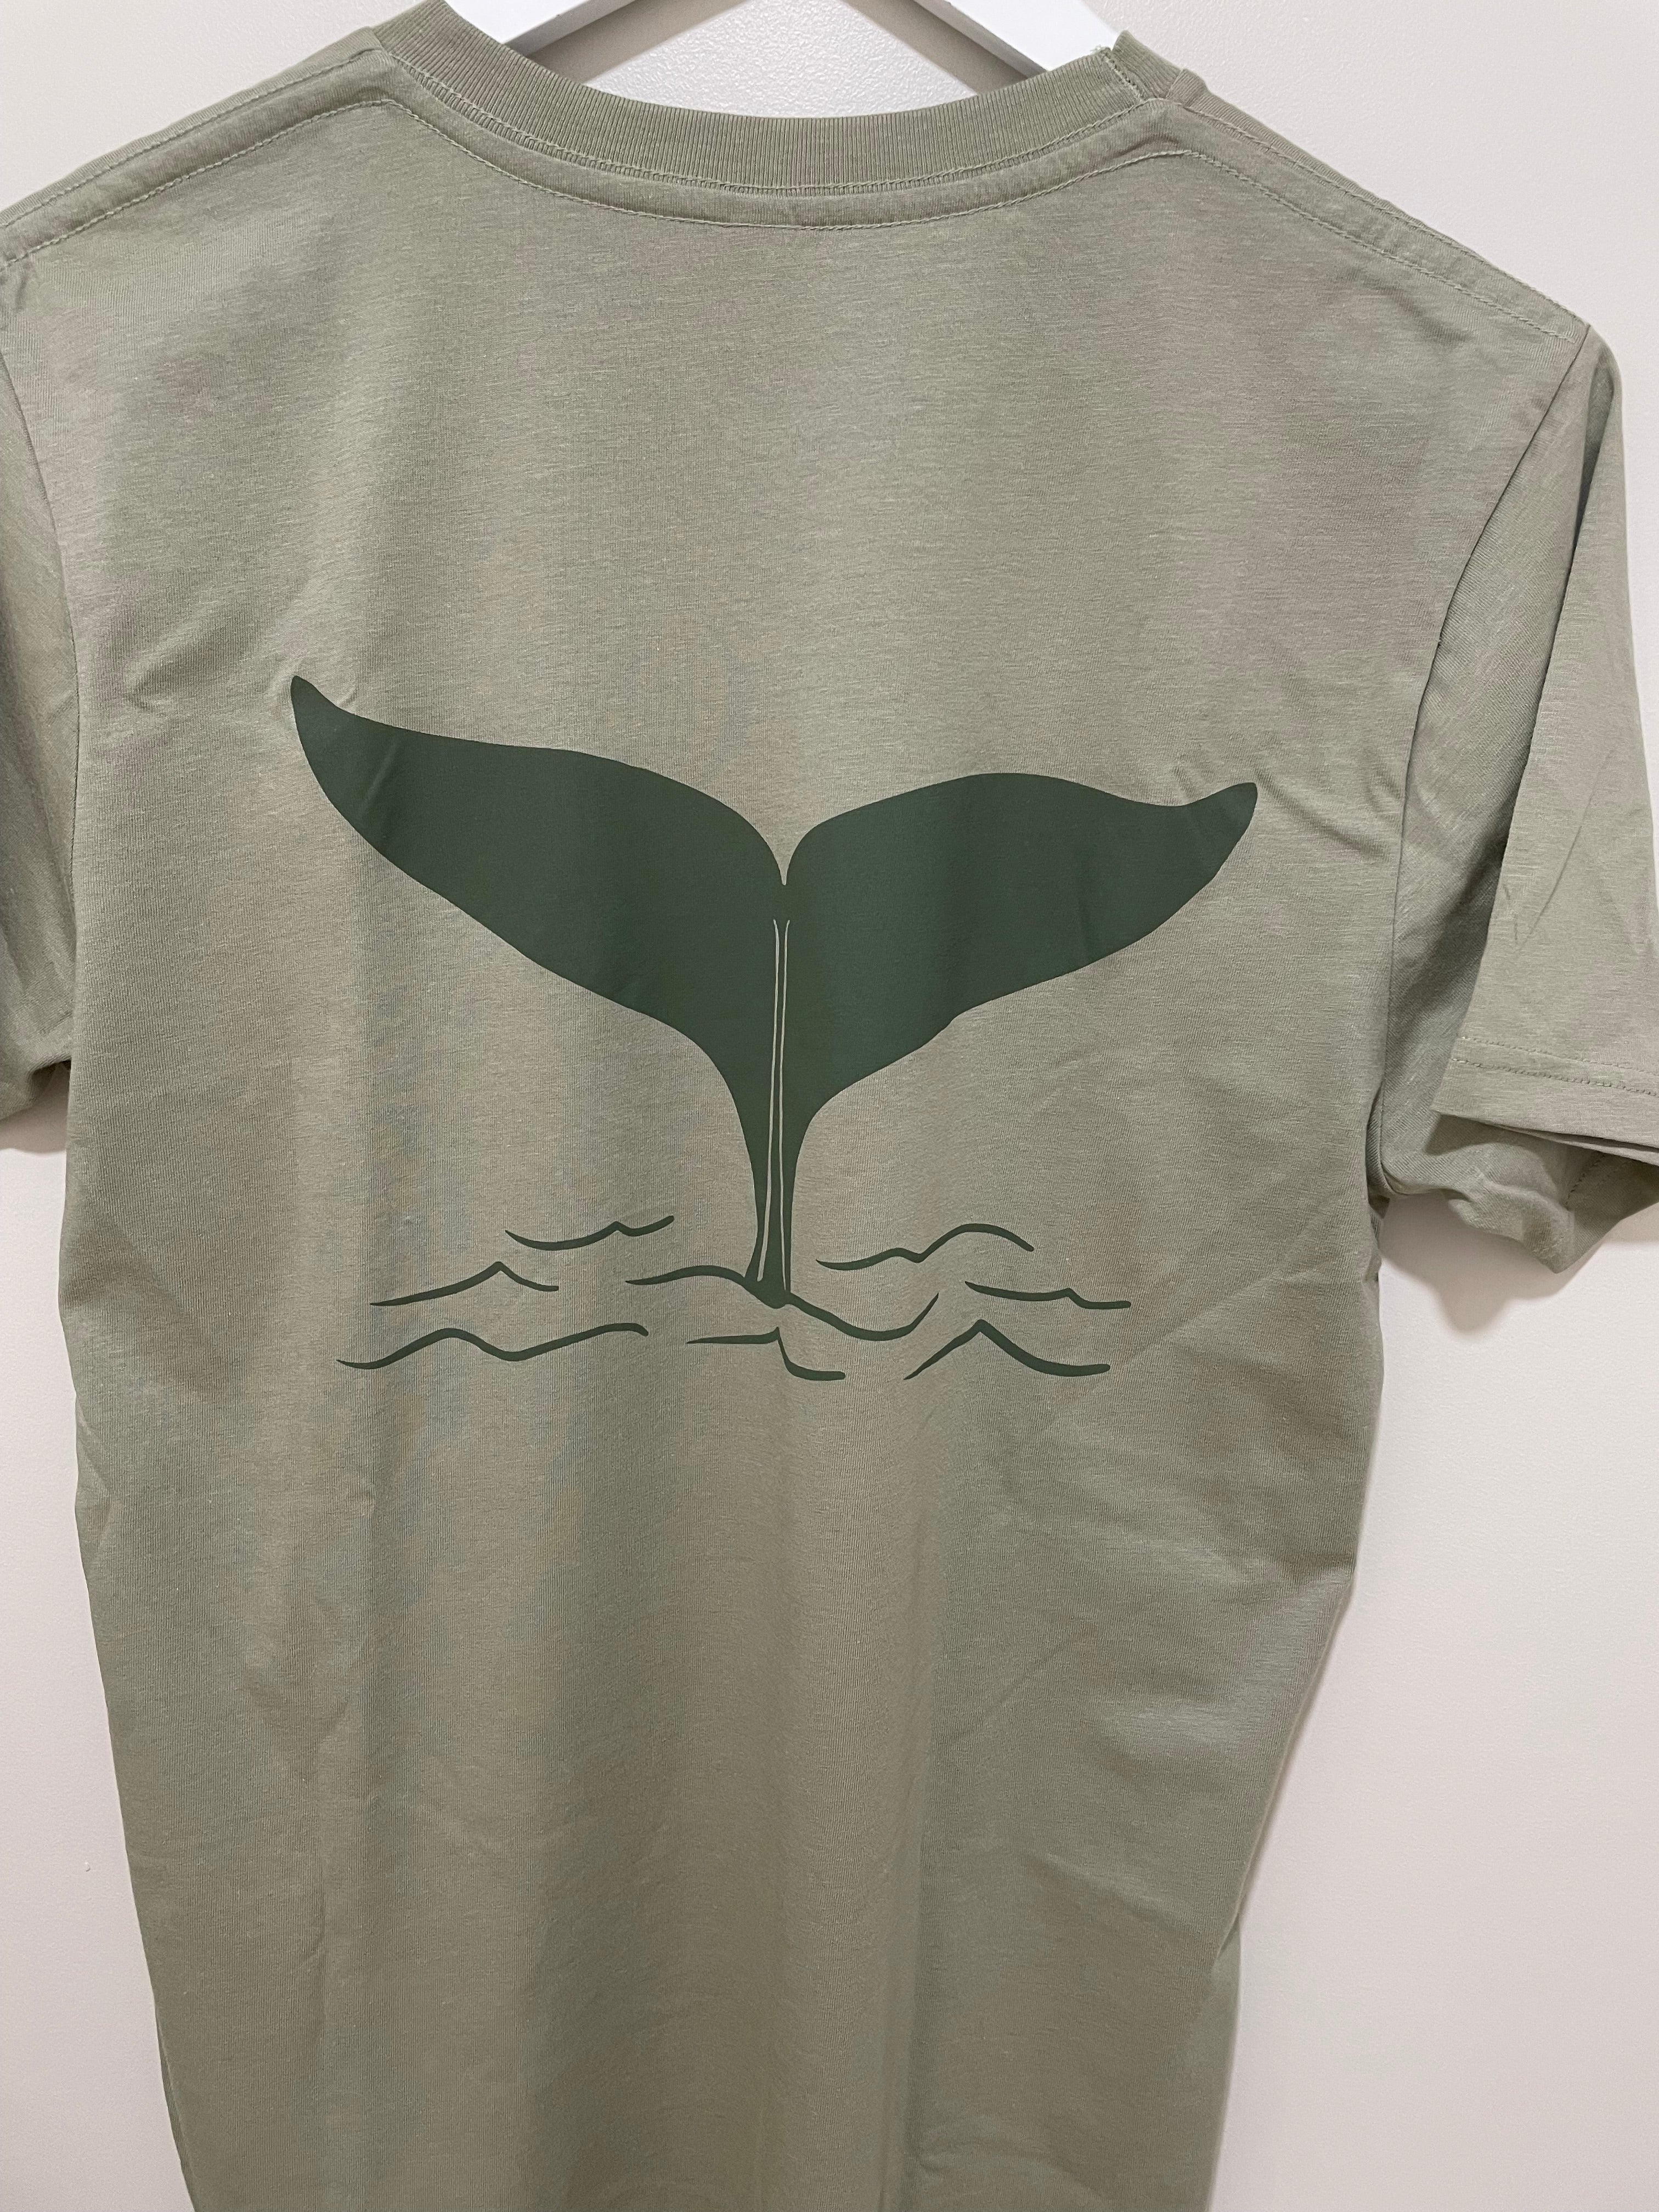 Unisex Whale tail T shirt in Pistachio